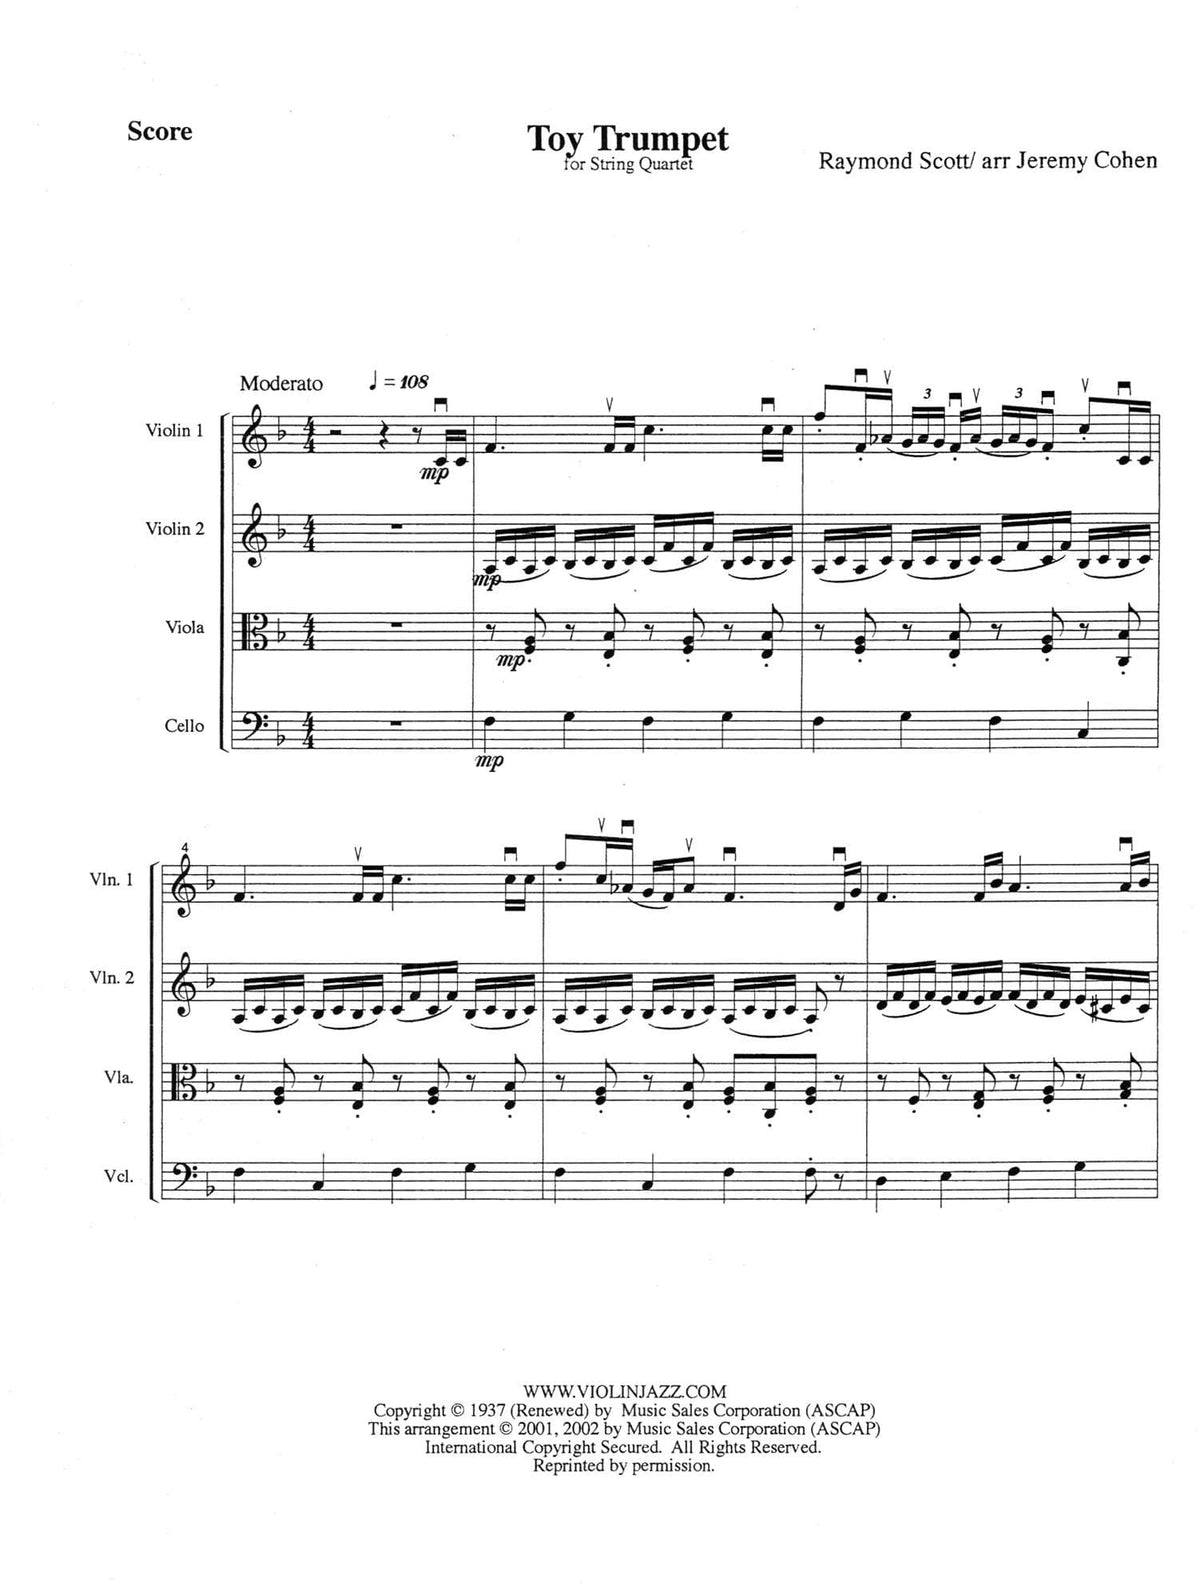 Scott, Raymond - Toy Trumpet - Raymond Scott Collection - for String Quartet - arranged by Jeremy Cohen - Violinjazz Editions